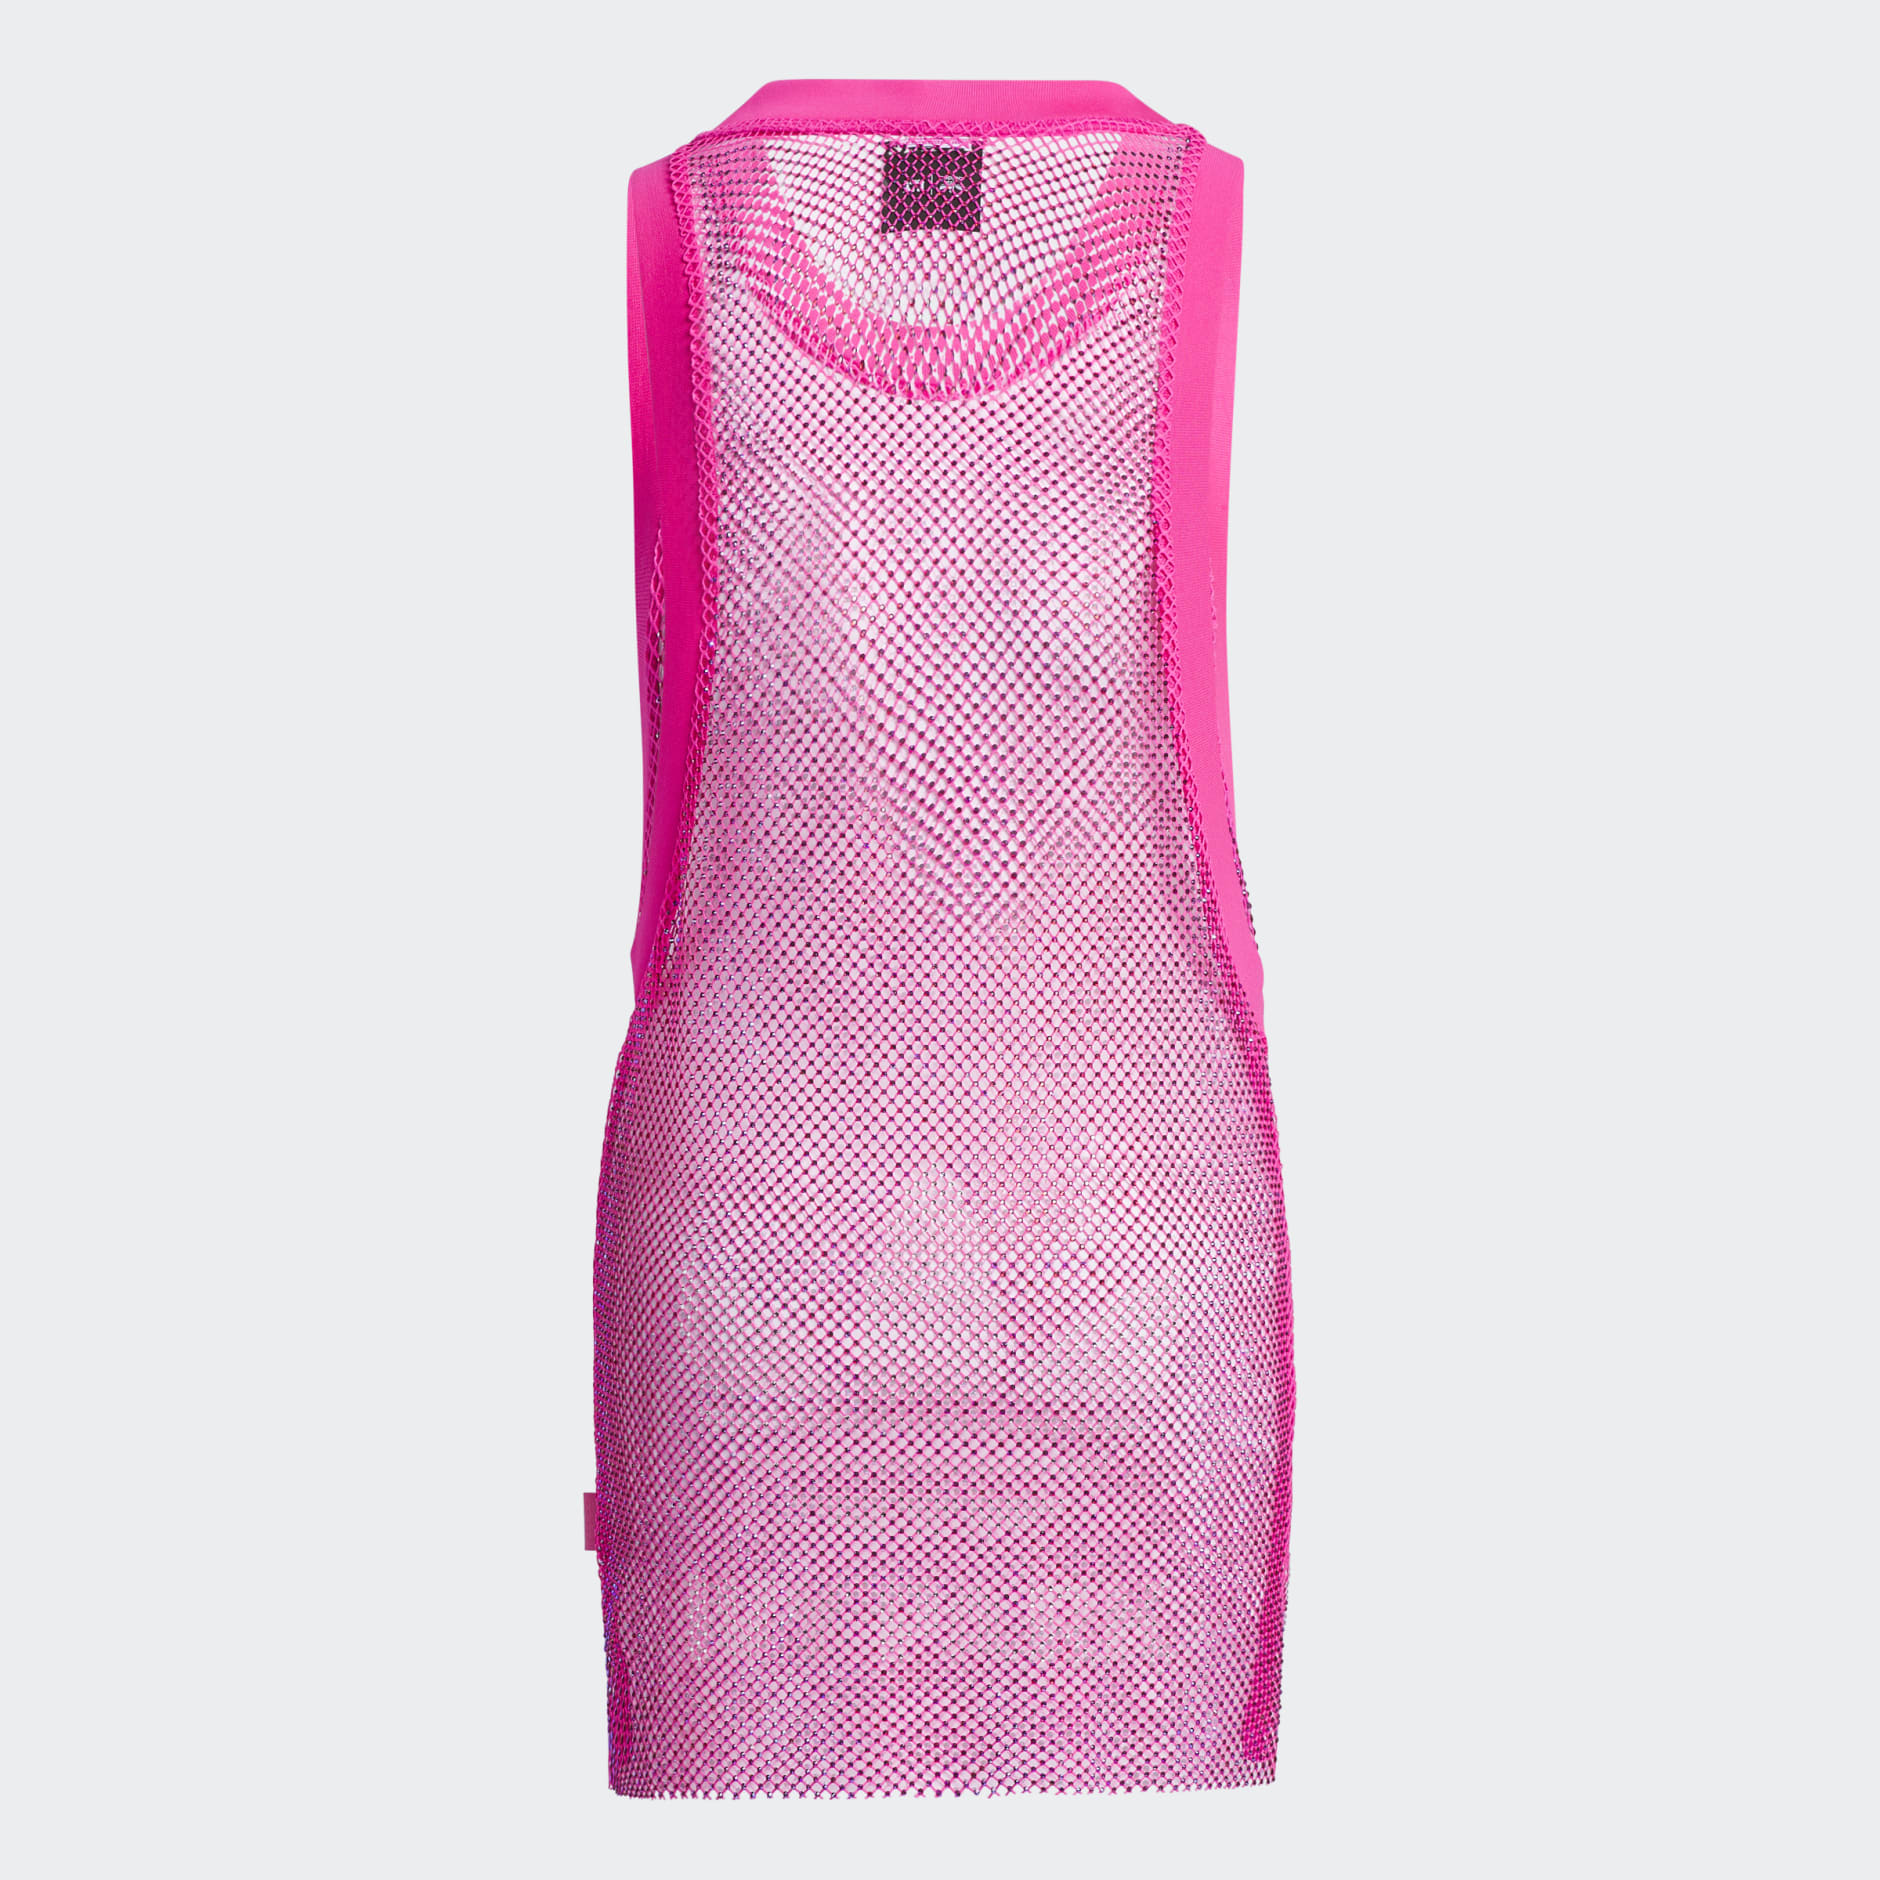 Clothing - IVY PARK Crystal Mesh Tank Top (All Gender) - Pink